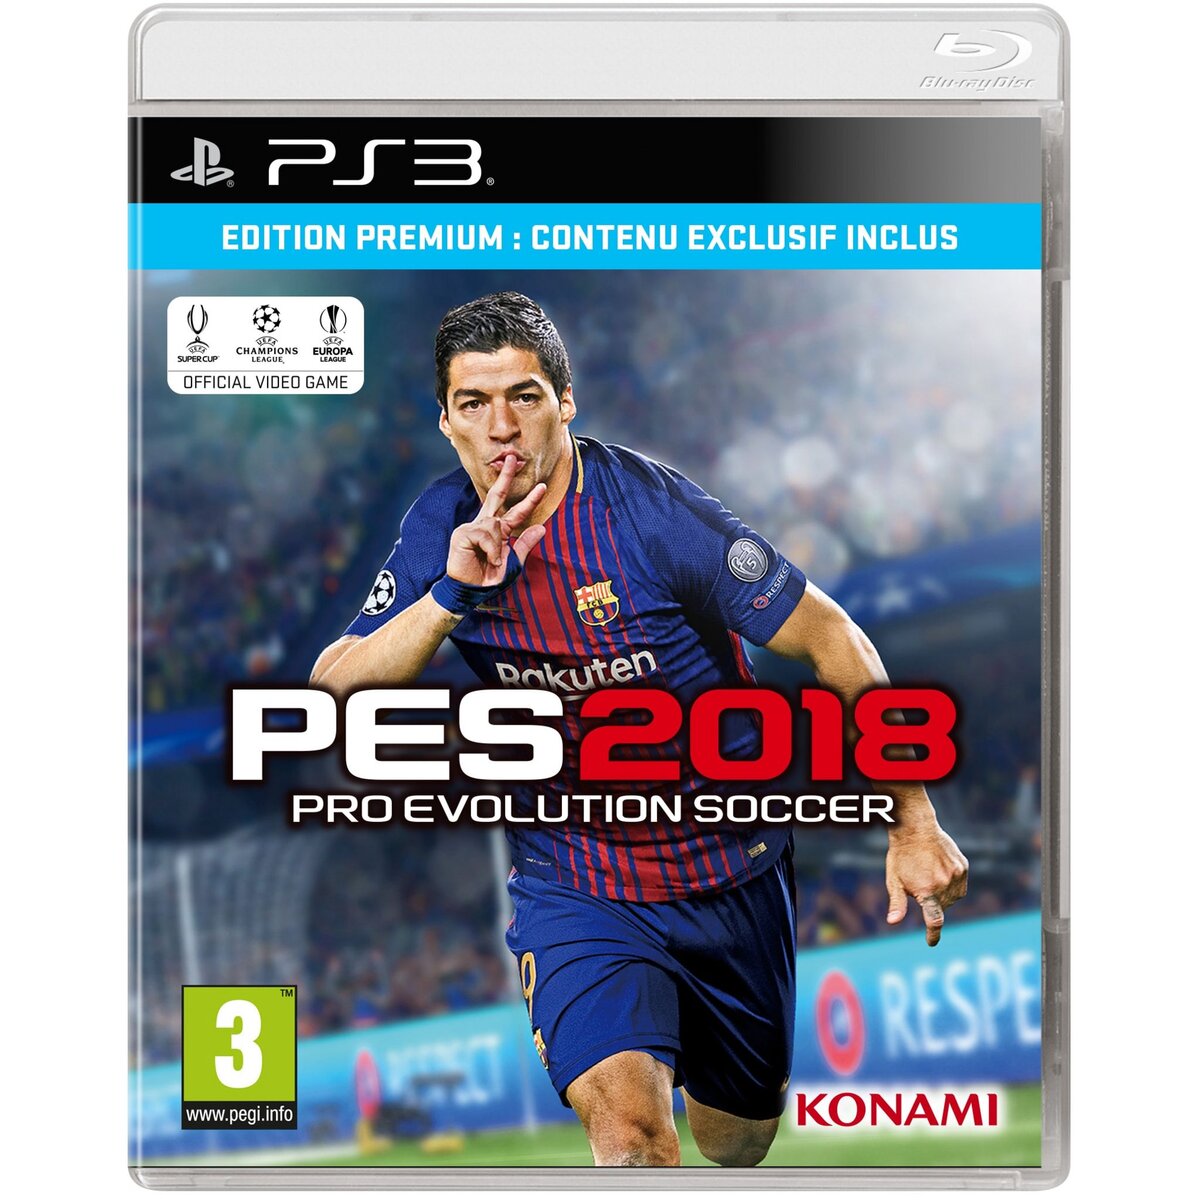 Pro Evolution Soccer 2018 - Edition Premium PS3